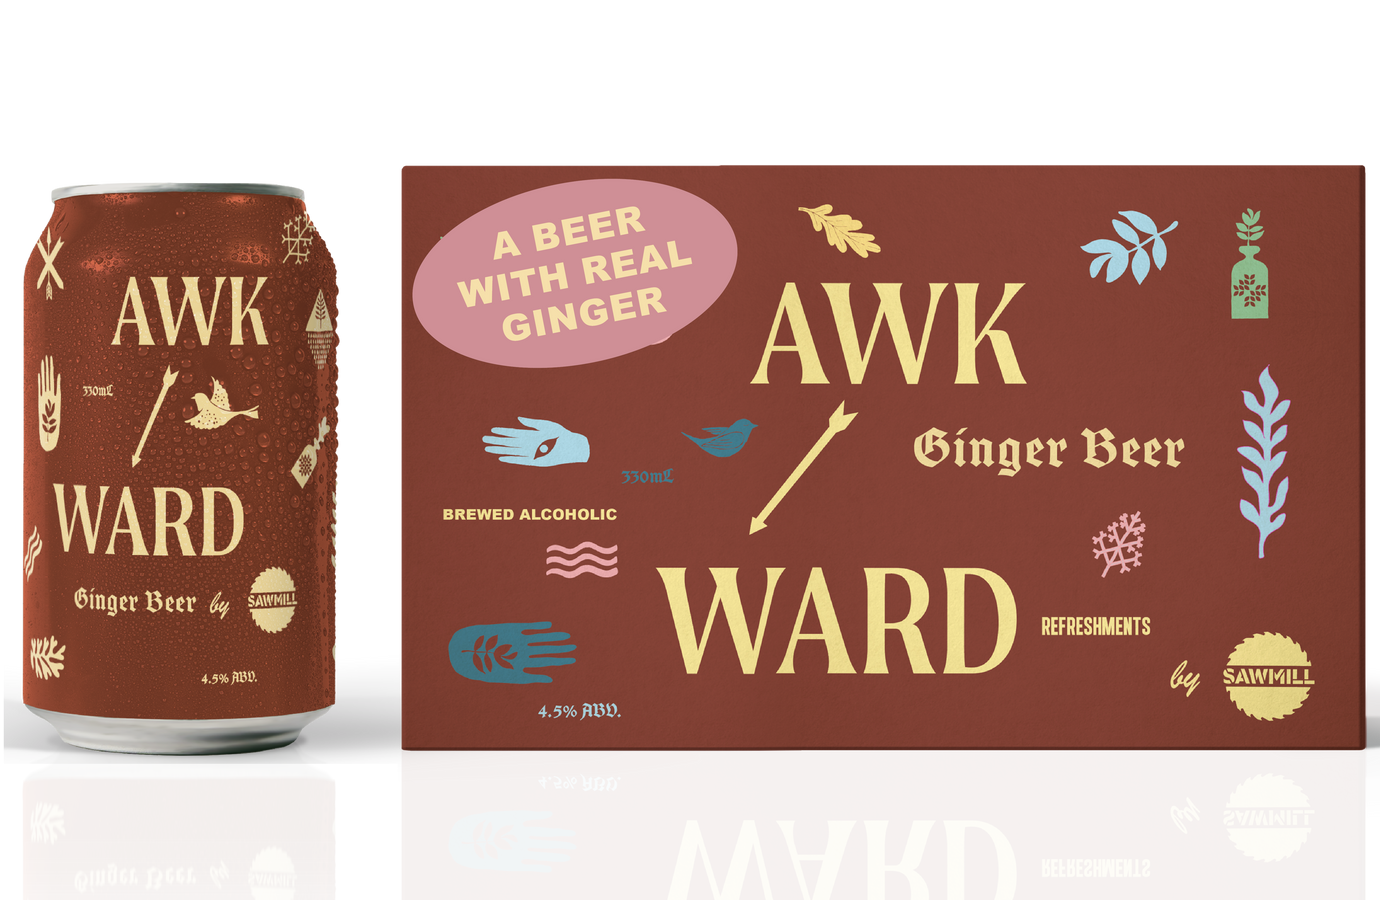 AWKWARD Ginger Beer